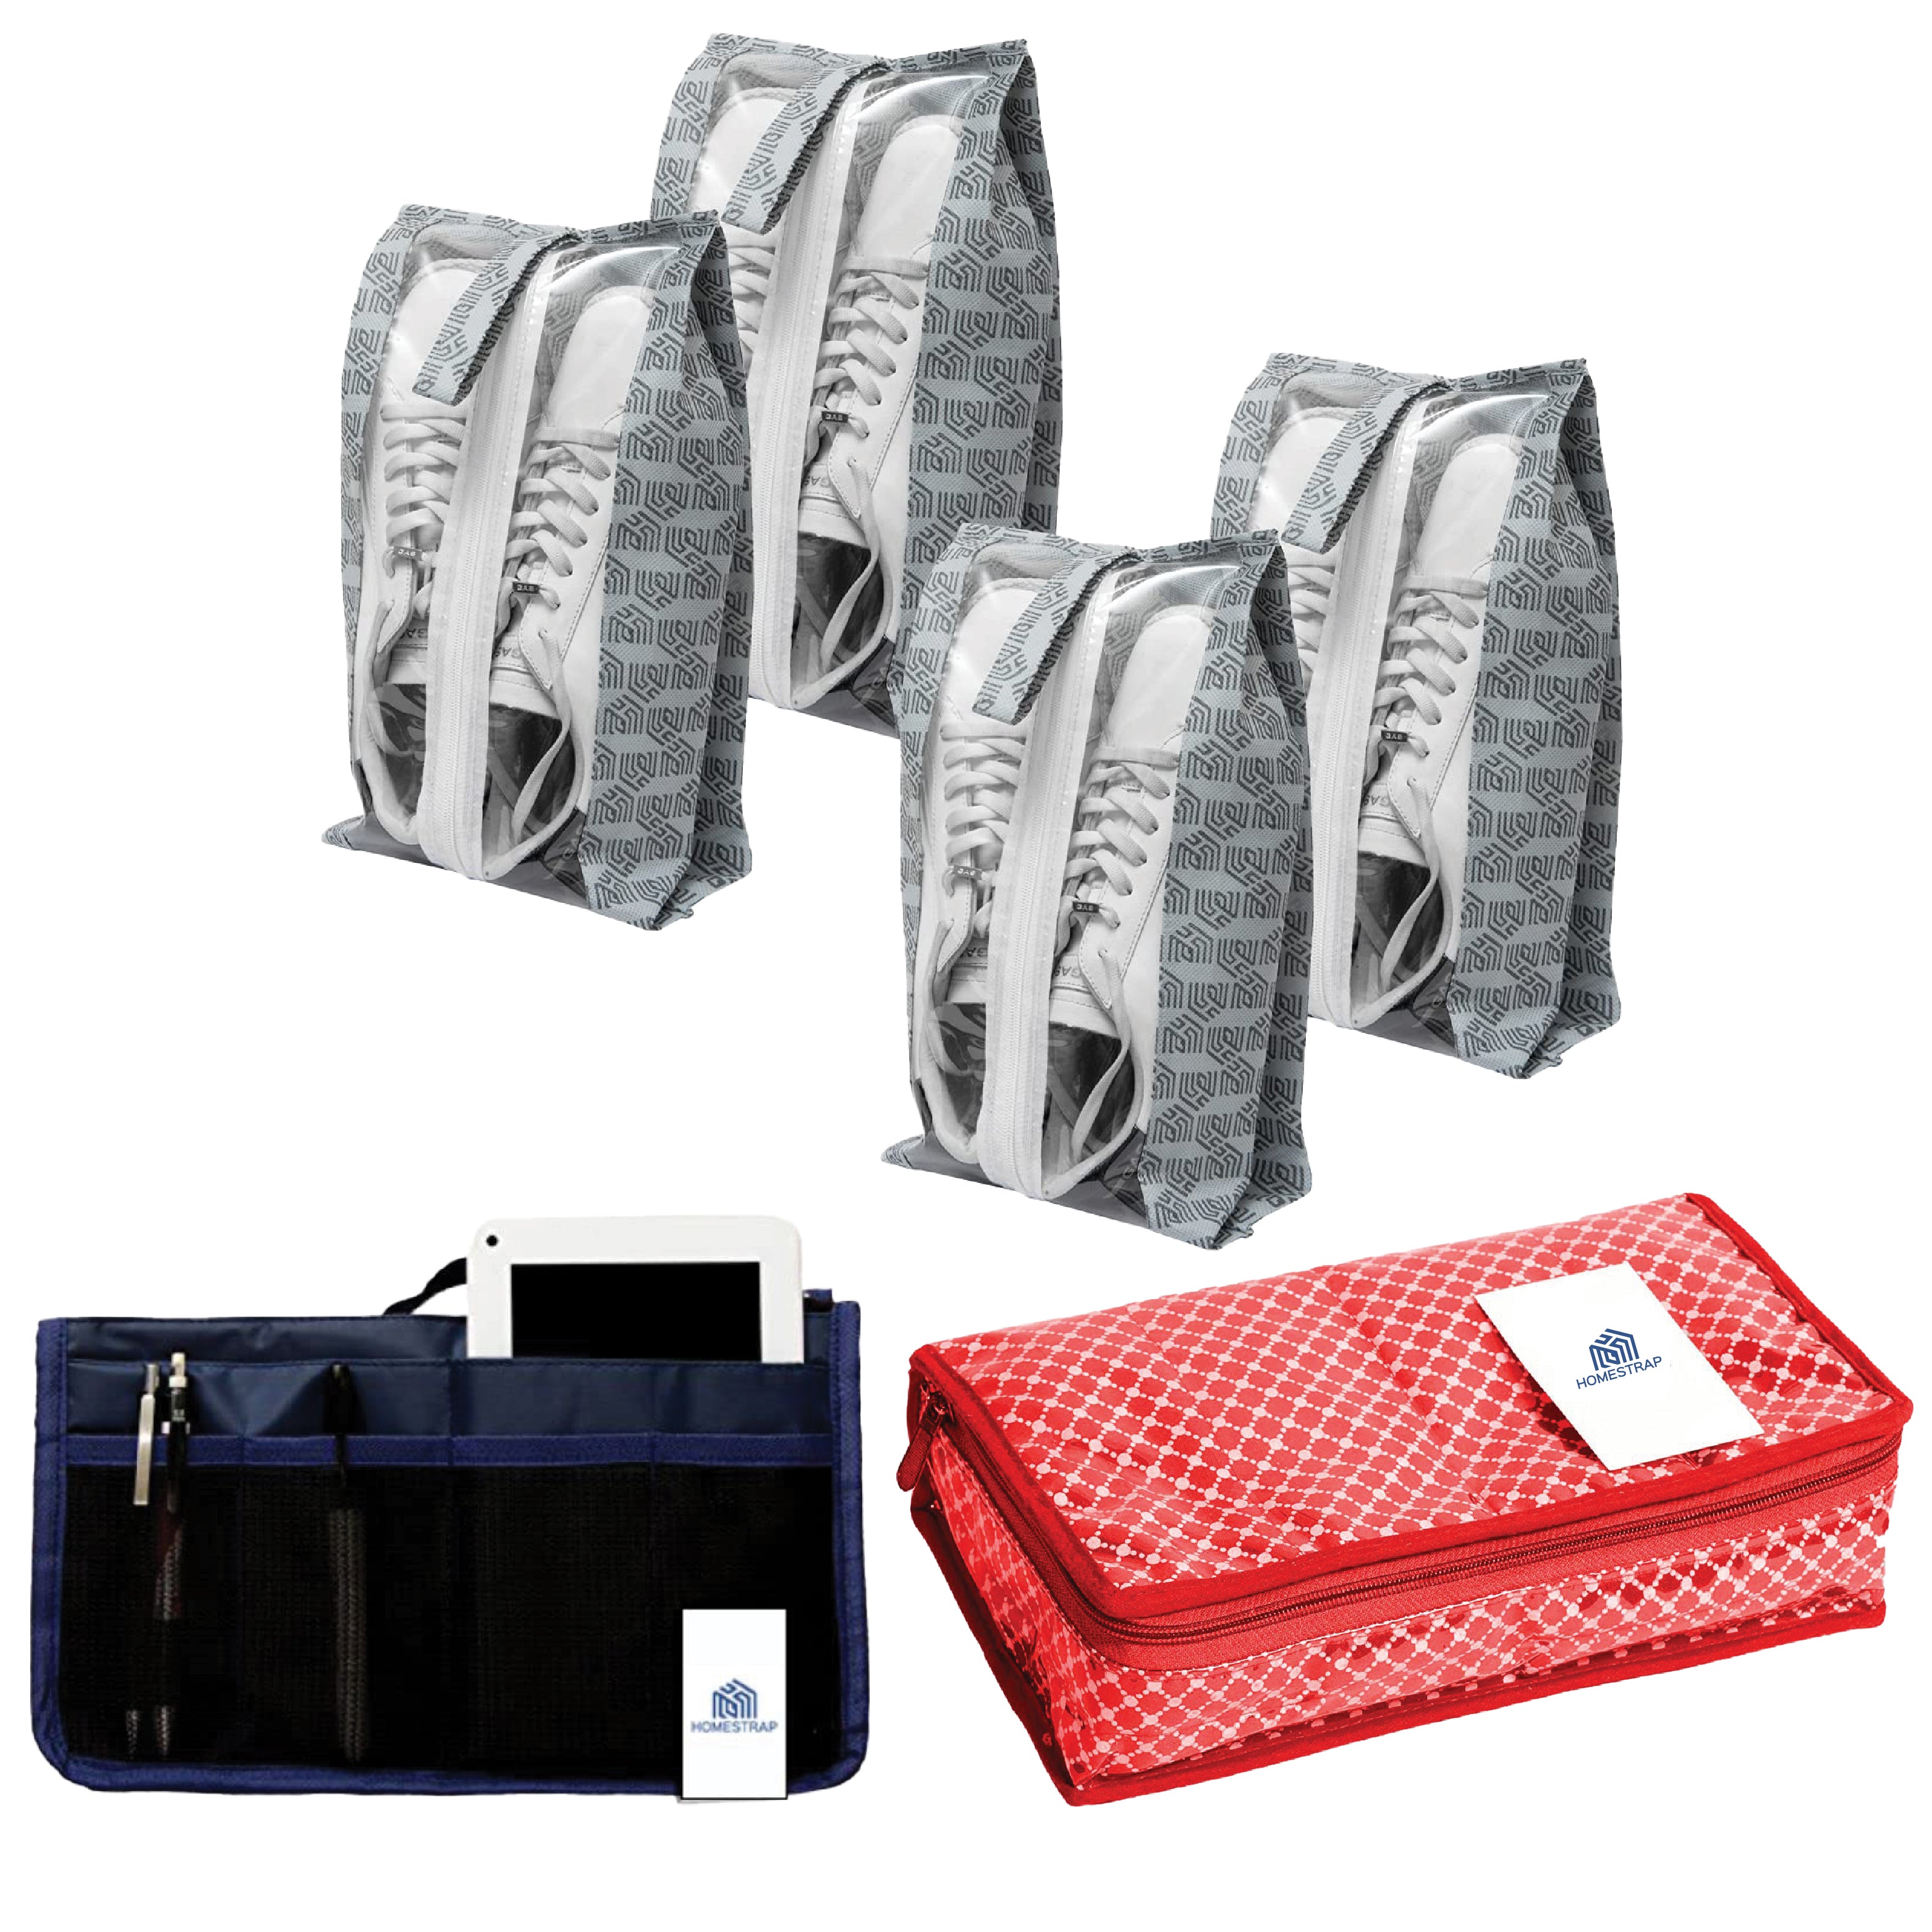 MAINDAIS Shoe Bag Set of 12 Bags Shoe Storage Bags Travel Shoe Cover  Grey Grey  Price in India  Flipkartcom